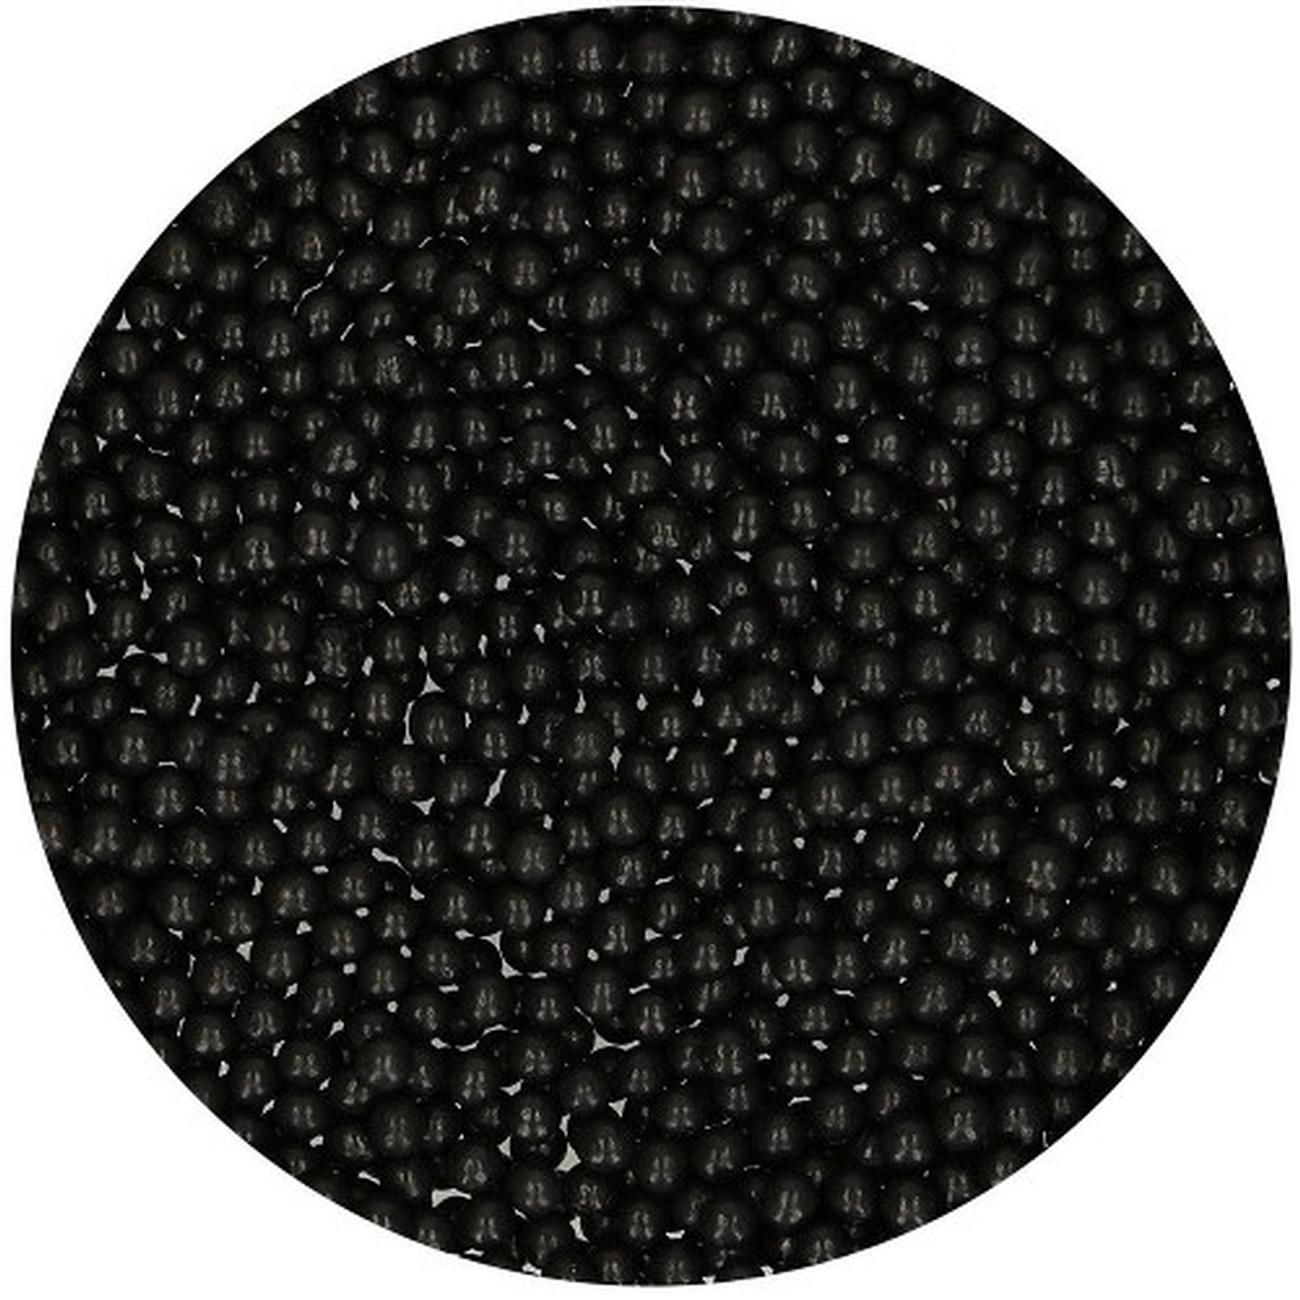 funcakes-black-med-sugar-pearls-80g - FunCakes Sugar Pearl Medium Shiny Black 80g